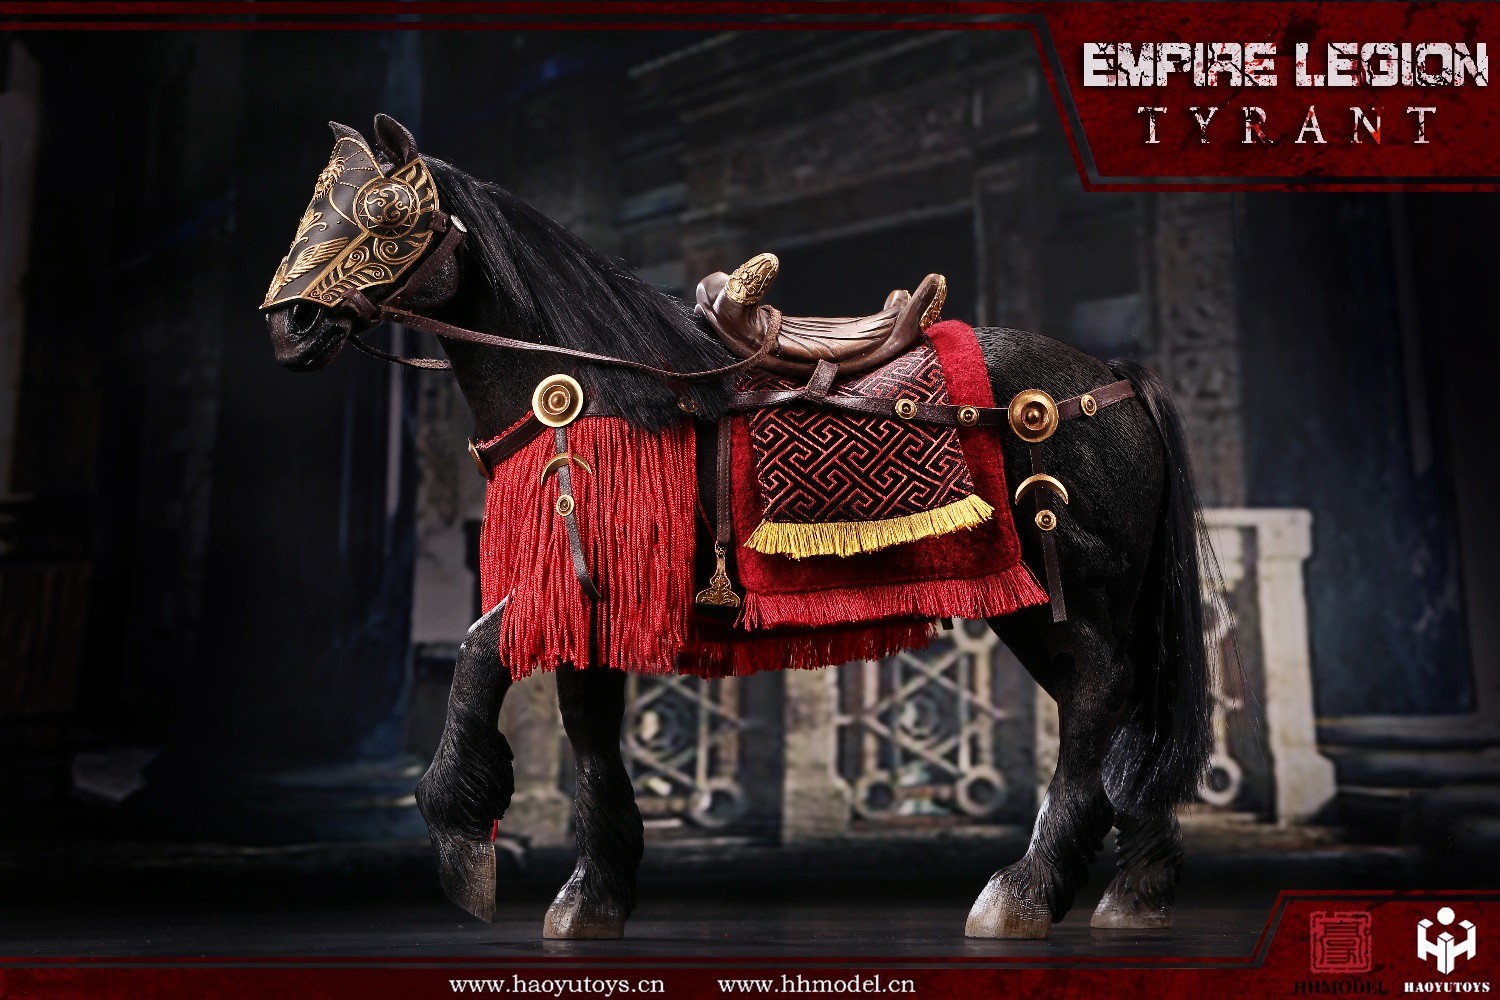 1/6 Scale HaoYuToys HHmodel Rome Roman Imperial Legion Tyrant War Horse HH18042